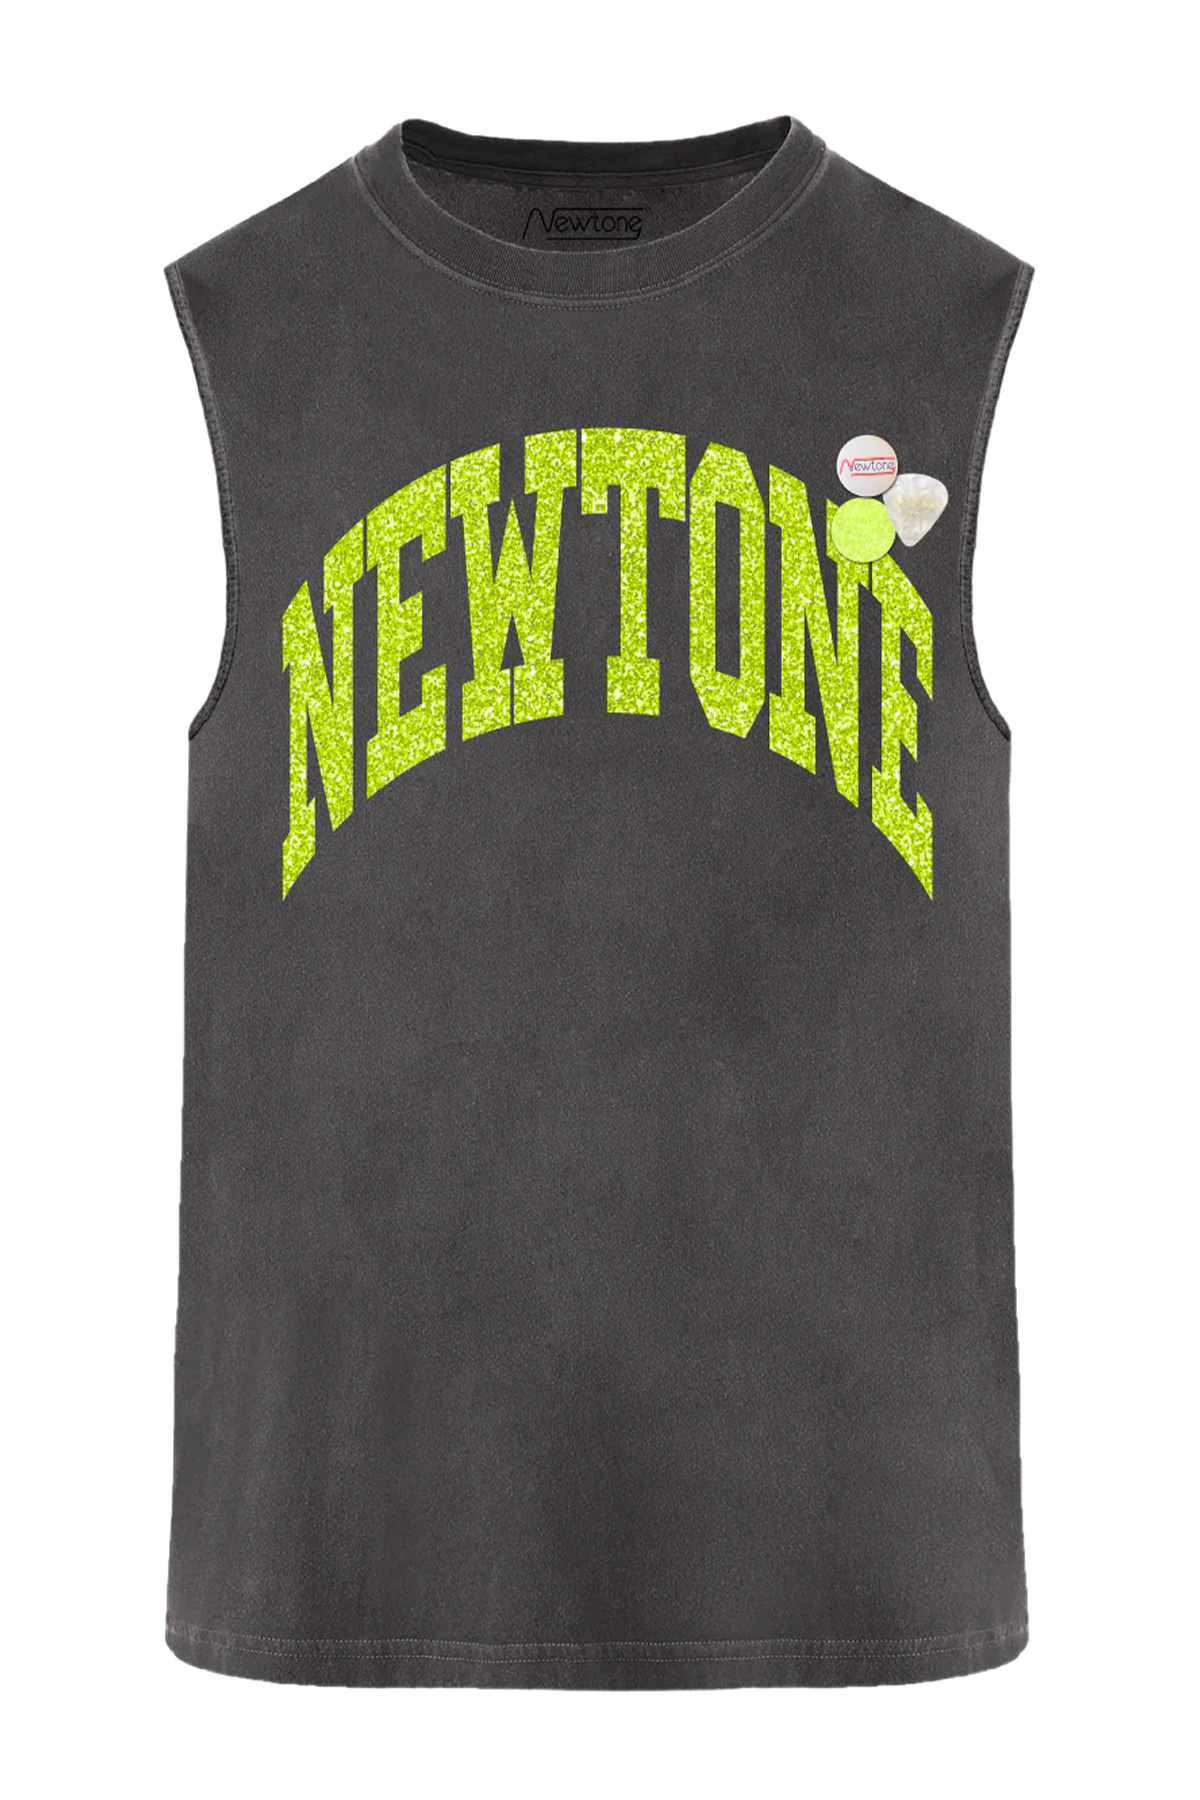 newtone brand t shirt biker tone